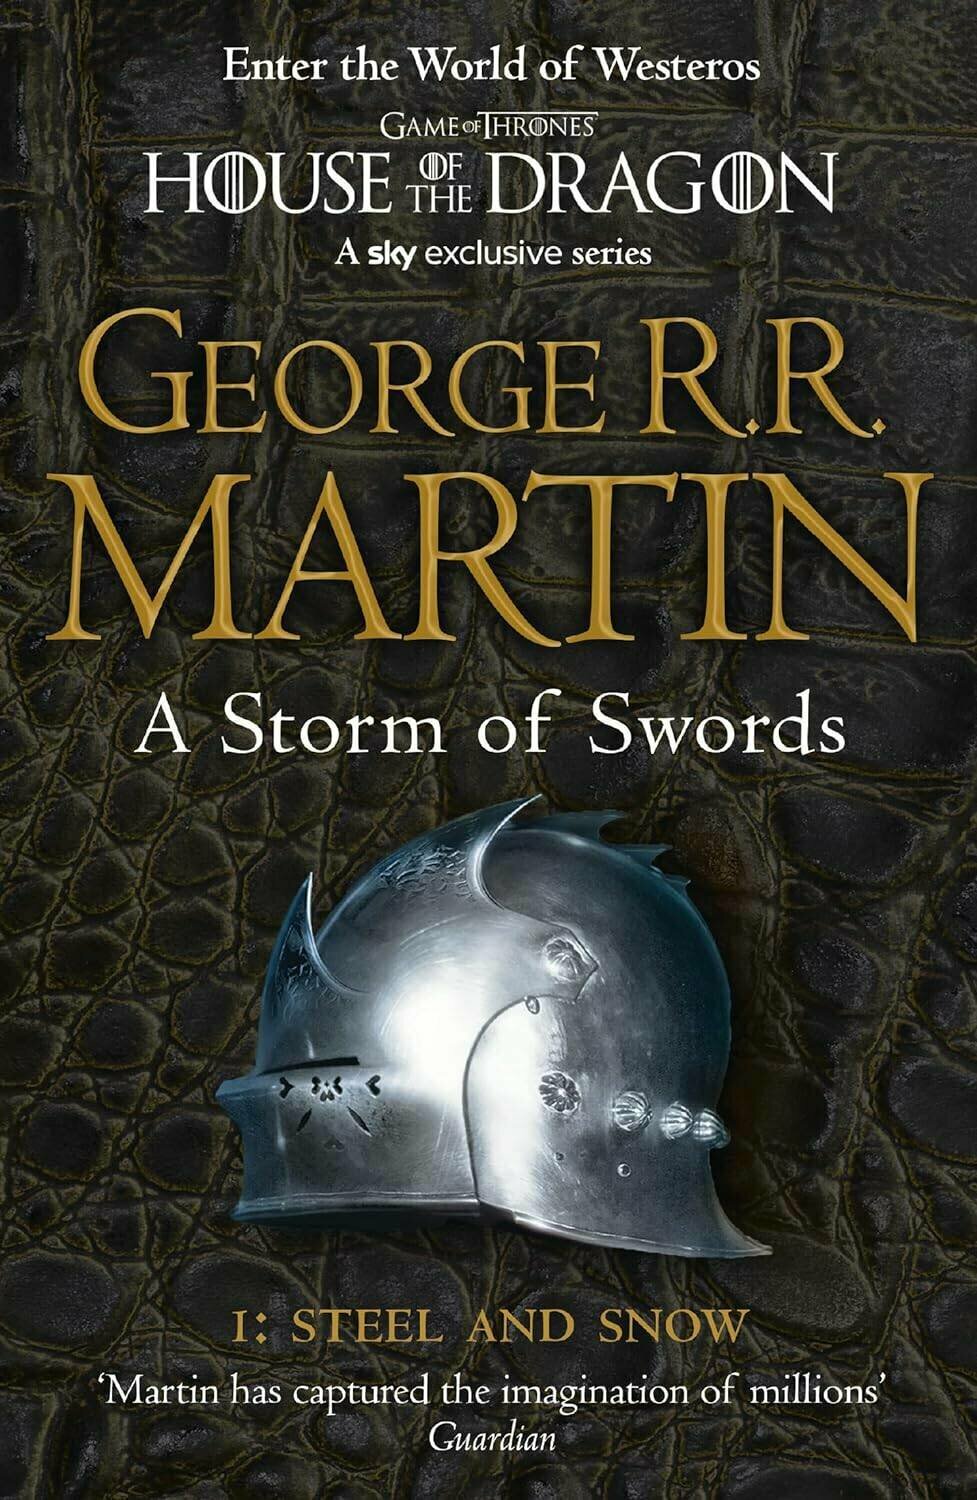 George R.R. Martin. A storm of swords part 1 (George R. R. Martin) Буря мечей часть 1 (Джордж Р. Р Мартин) /Книги на английском языке